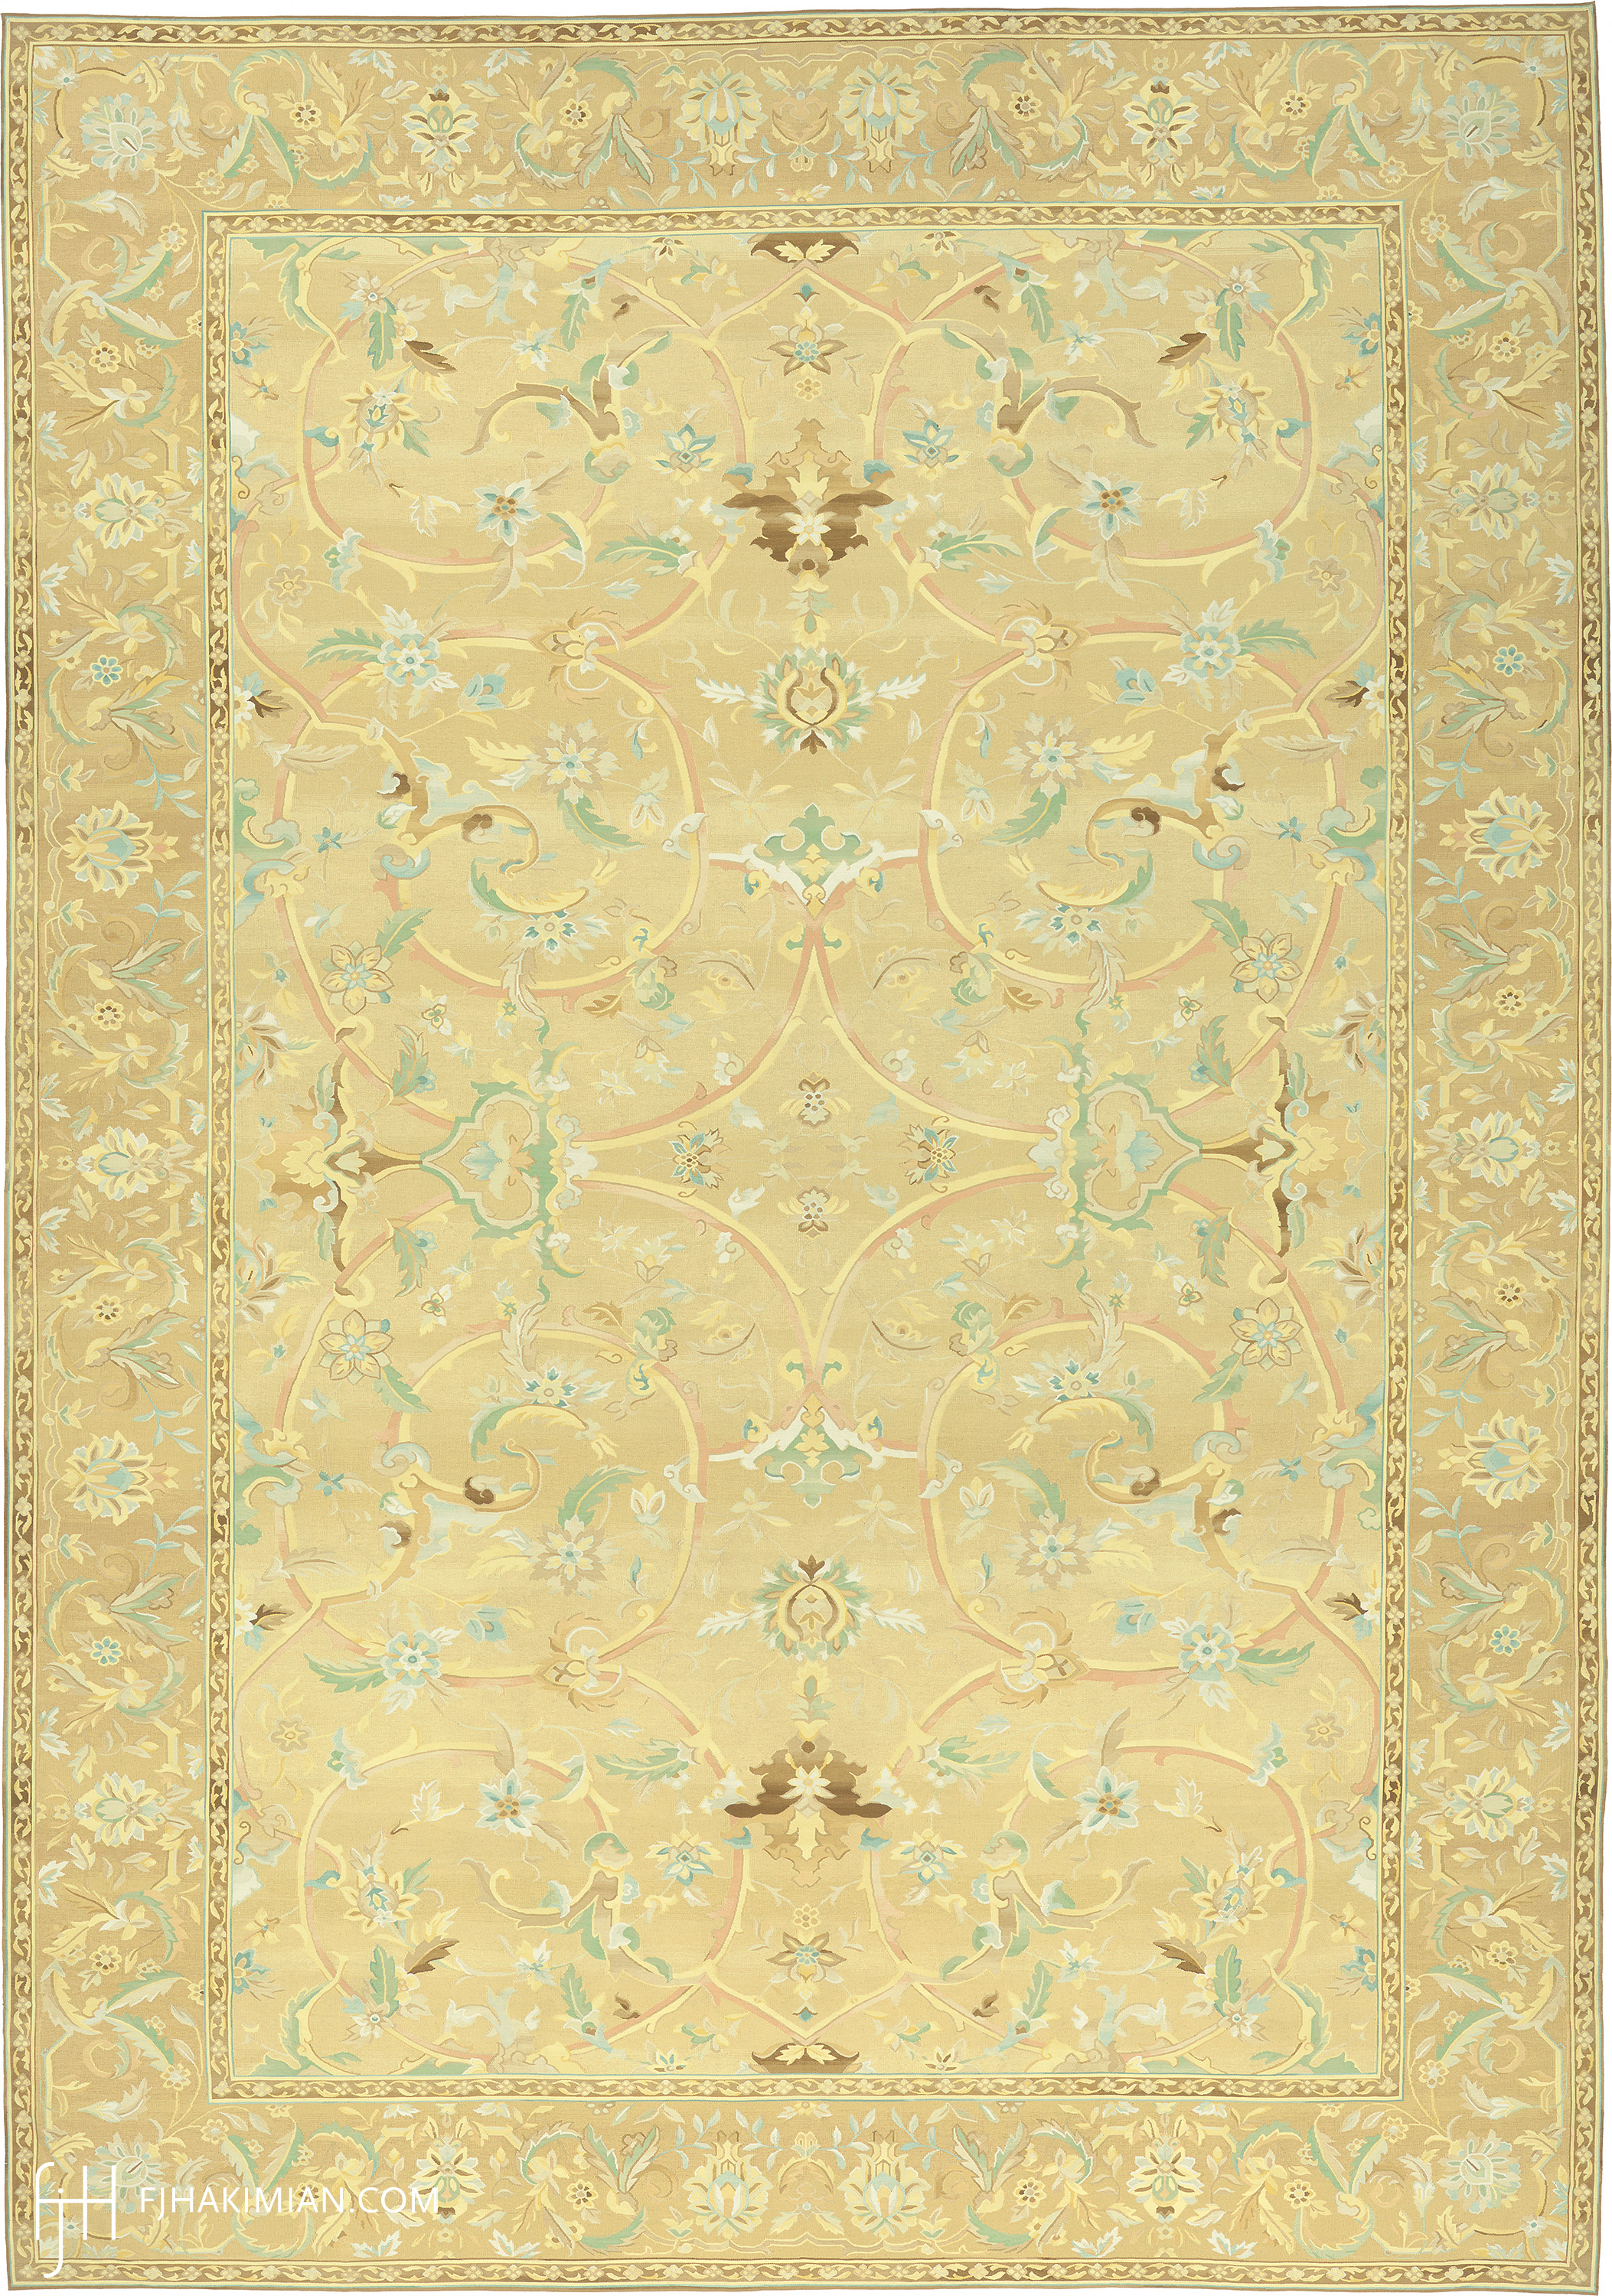 Sassoon Design | Custom Traditional Carpet | FJ Hakimian | Carpet Gallery in NY